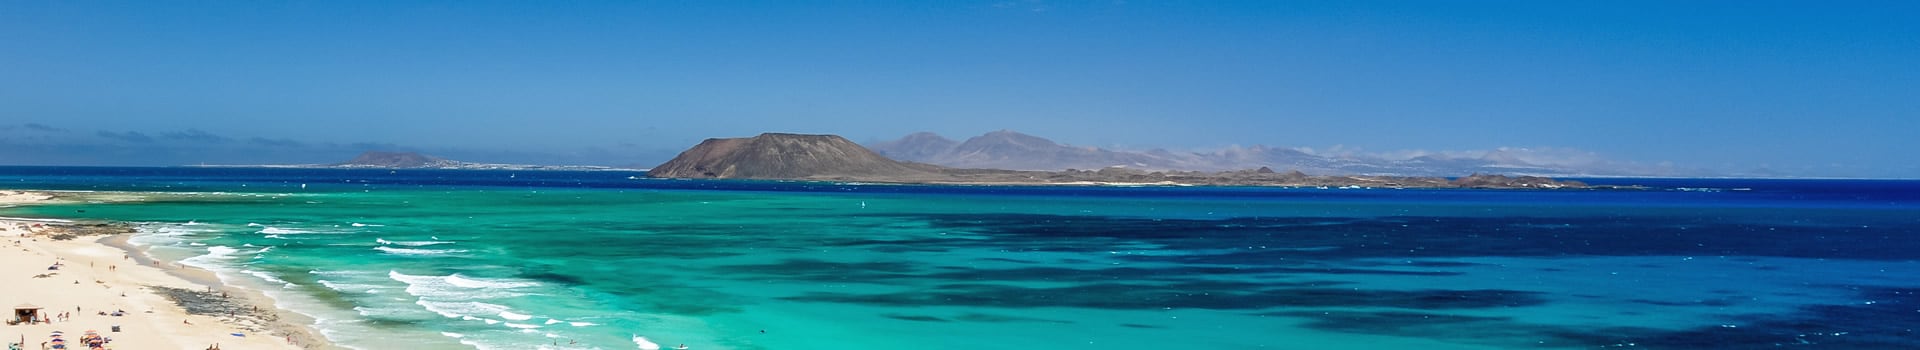 Billetes de Barco de Cádiz a Fuerteventura